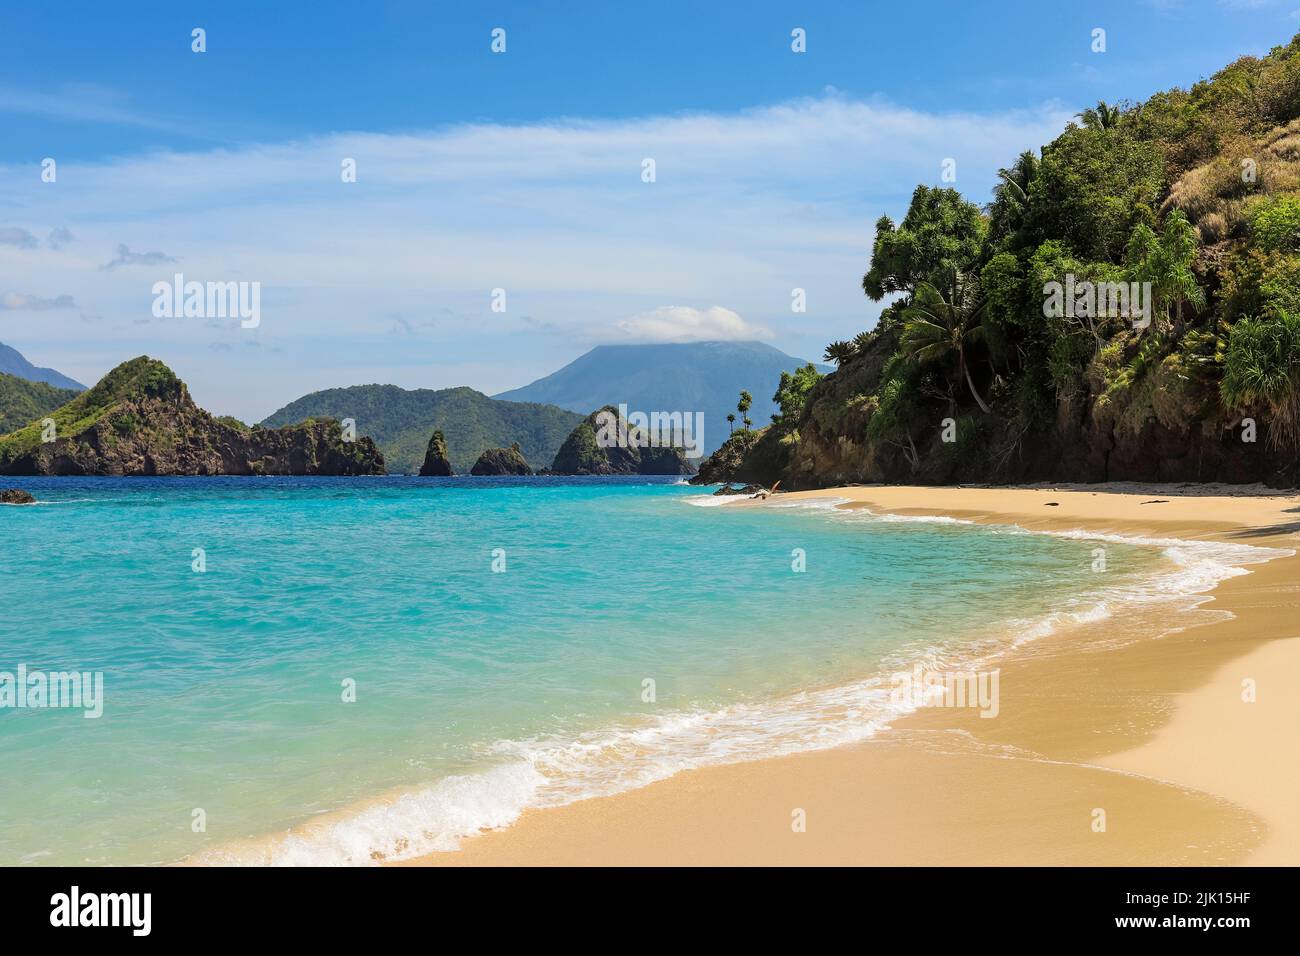 Schöner Strand auf der Mahoro Insel mit dem Vulkan Masare und Karangetang dahinter, Mahoro, Siau, Sangihe-Archipel, Nord-Sulawesi, Indonesien Stockfoto